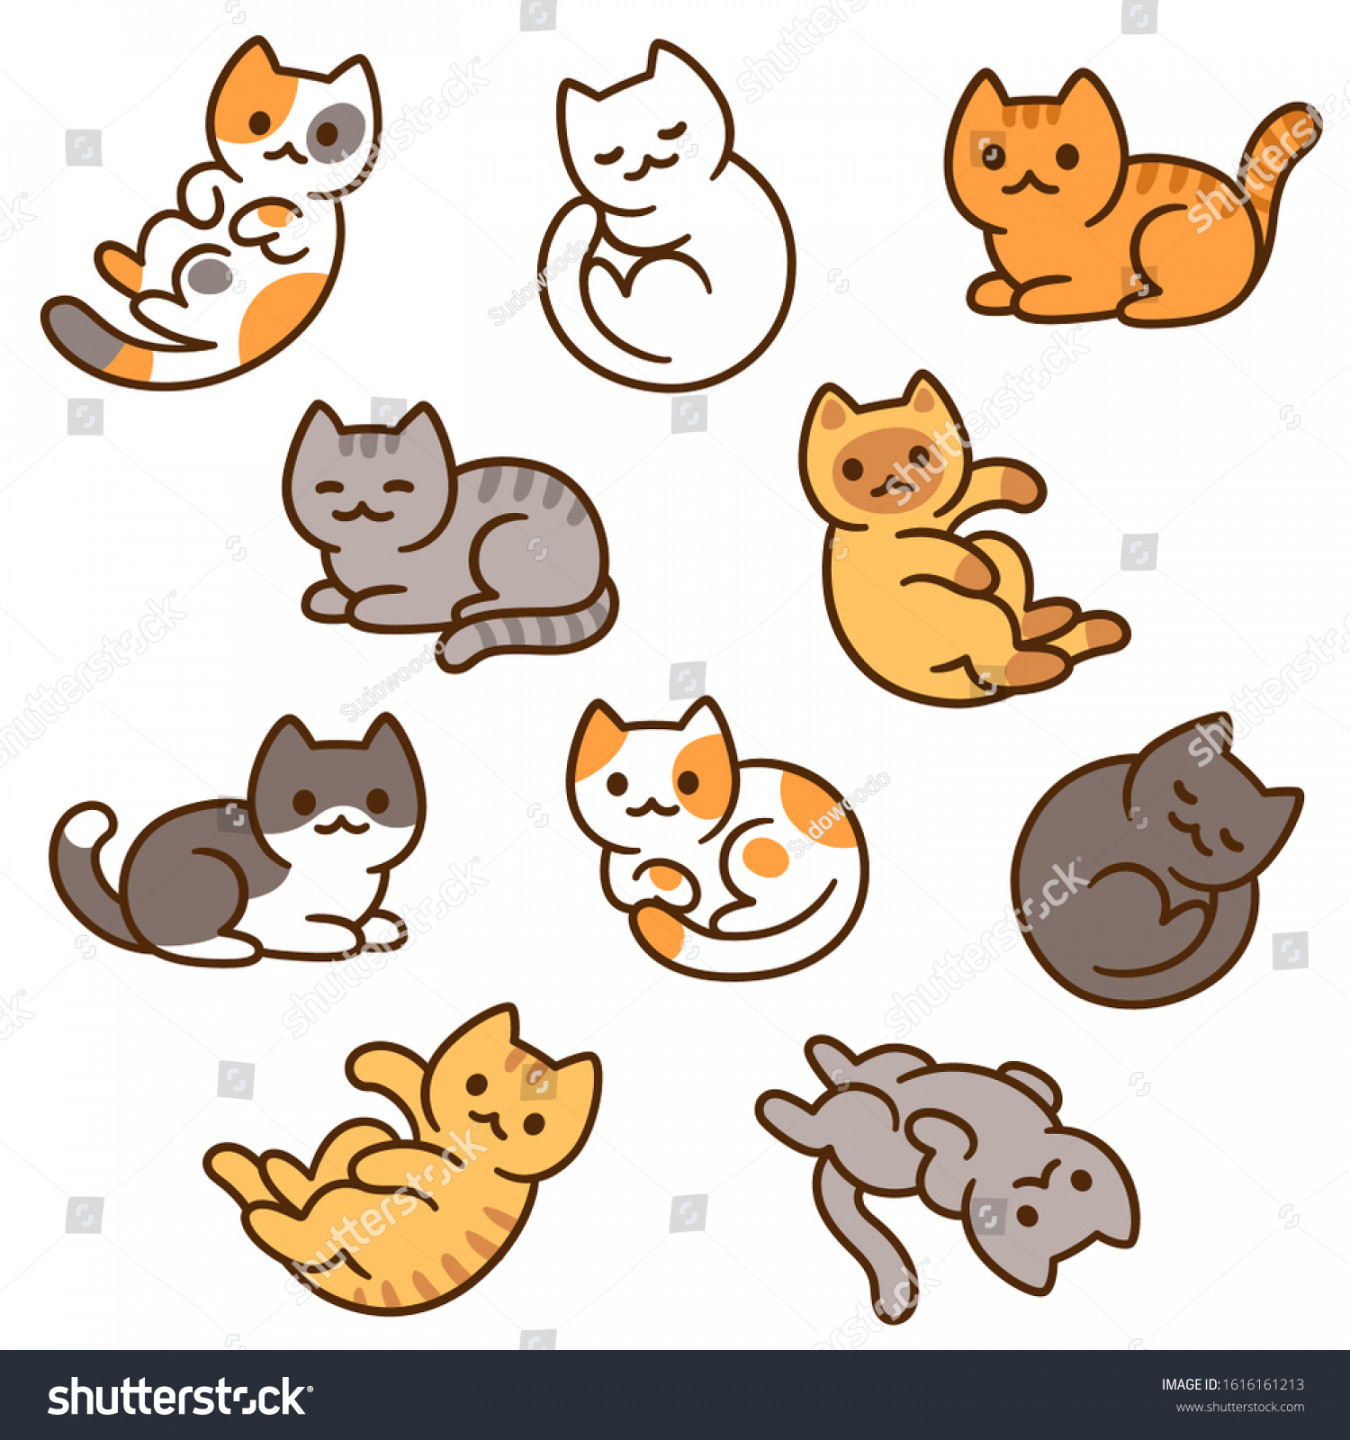 Cute Cartoon Cat Drawing Set Different: Stock-Vektorgrafik